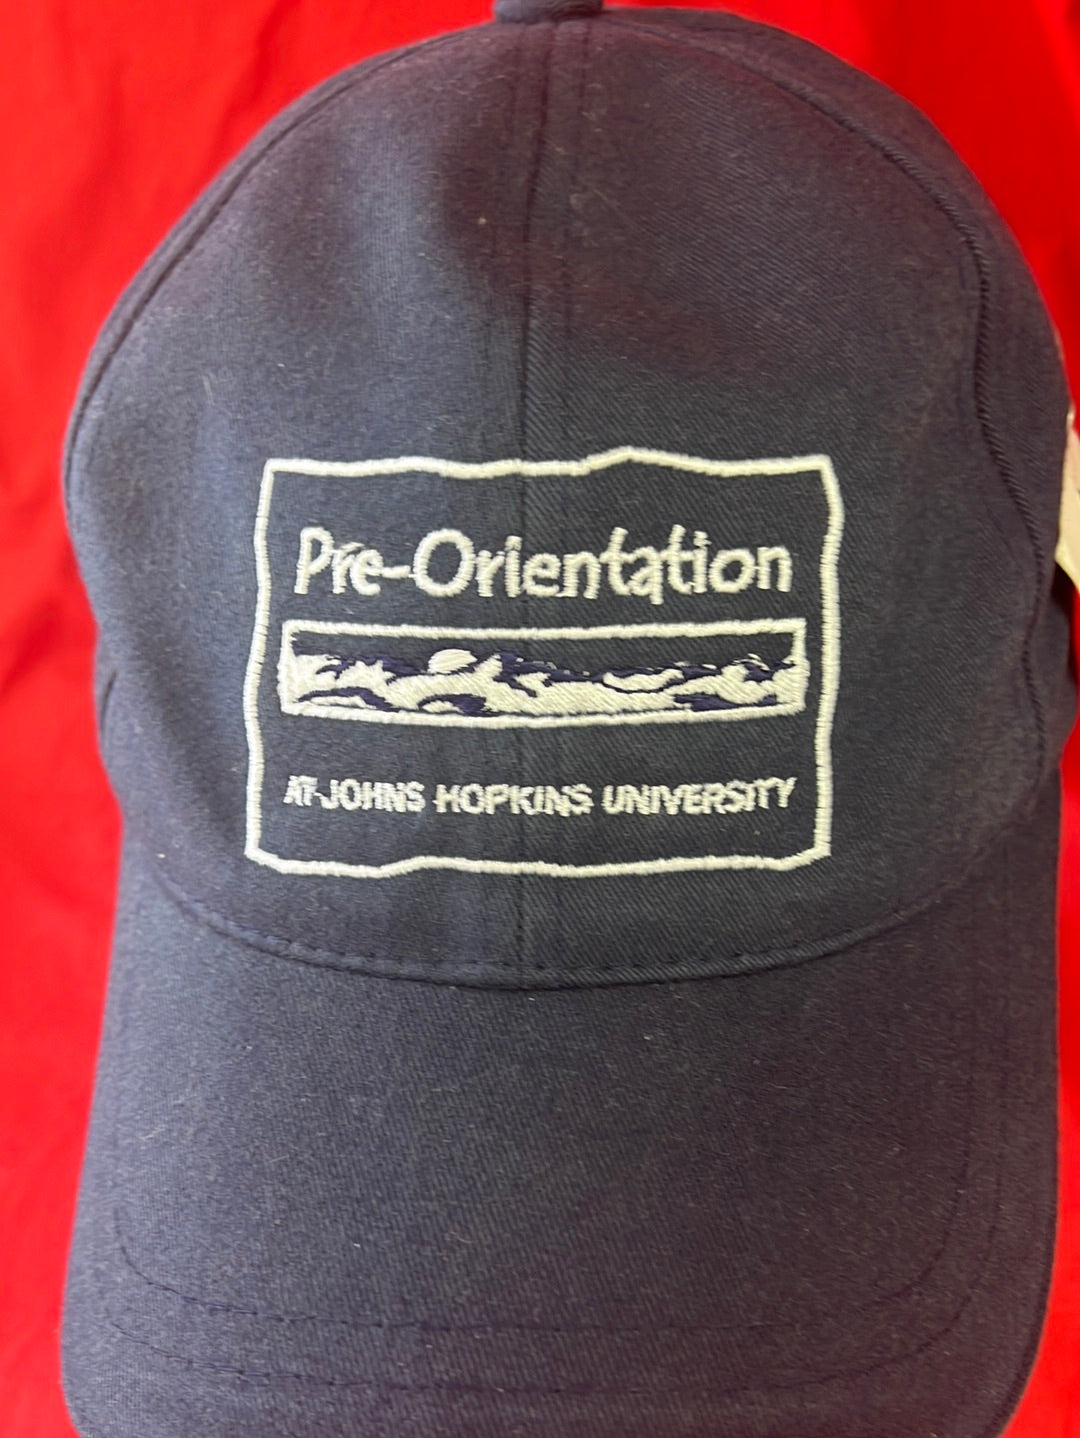 Johns Hopkins University Bucket Hats, Johns Hopkins University